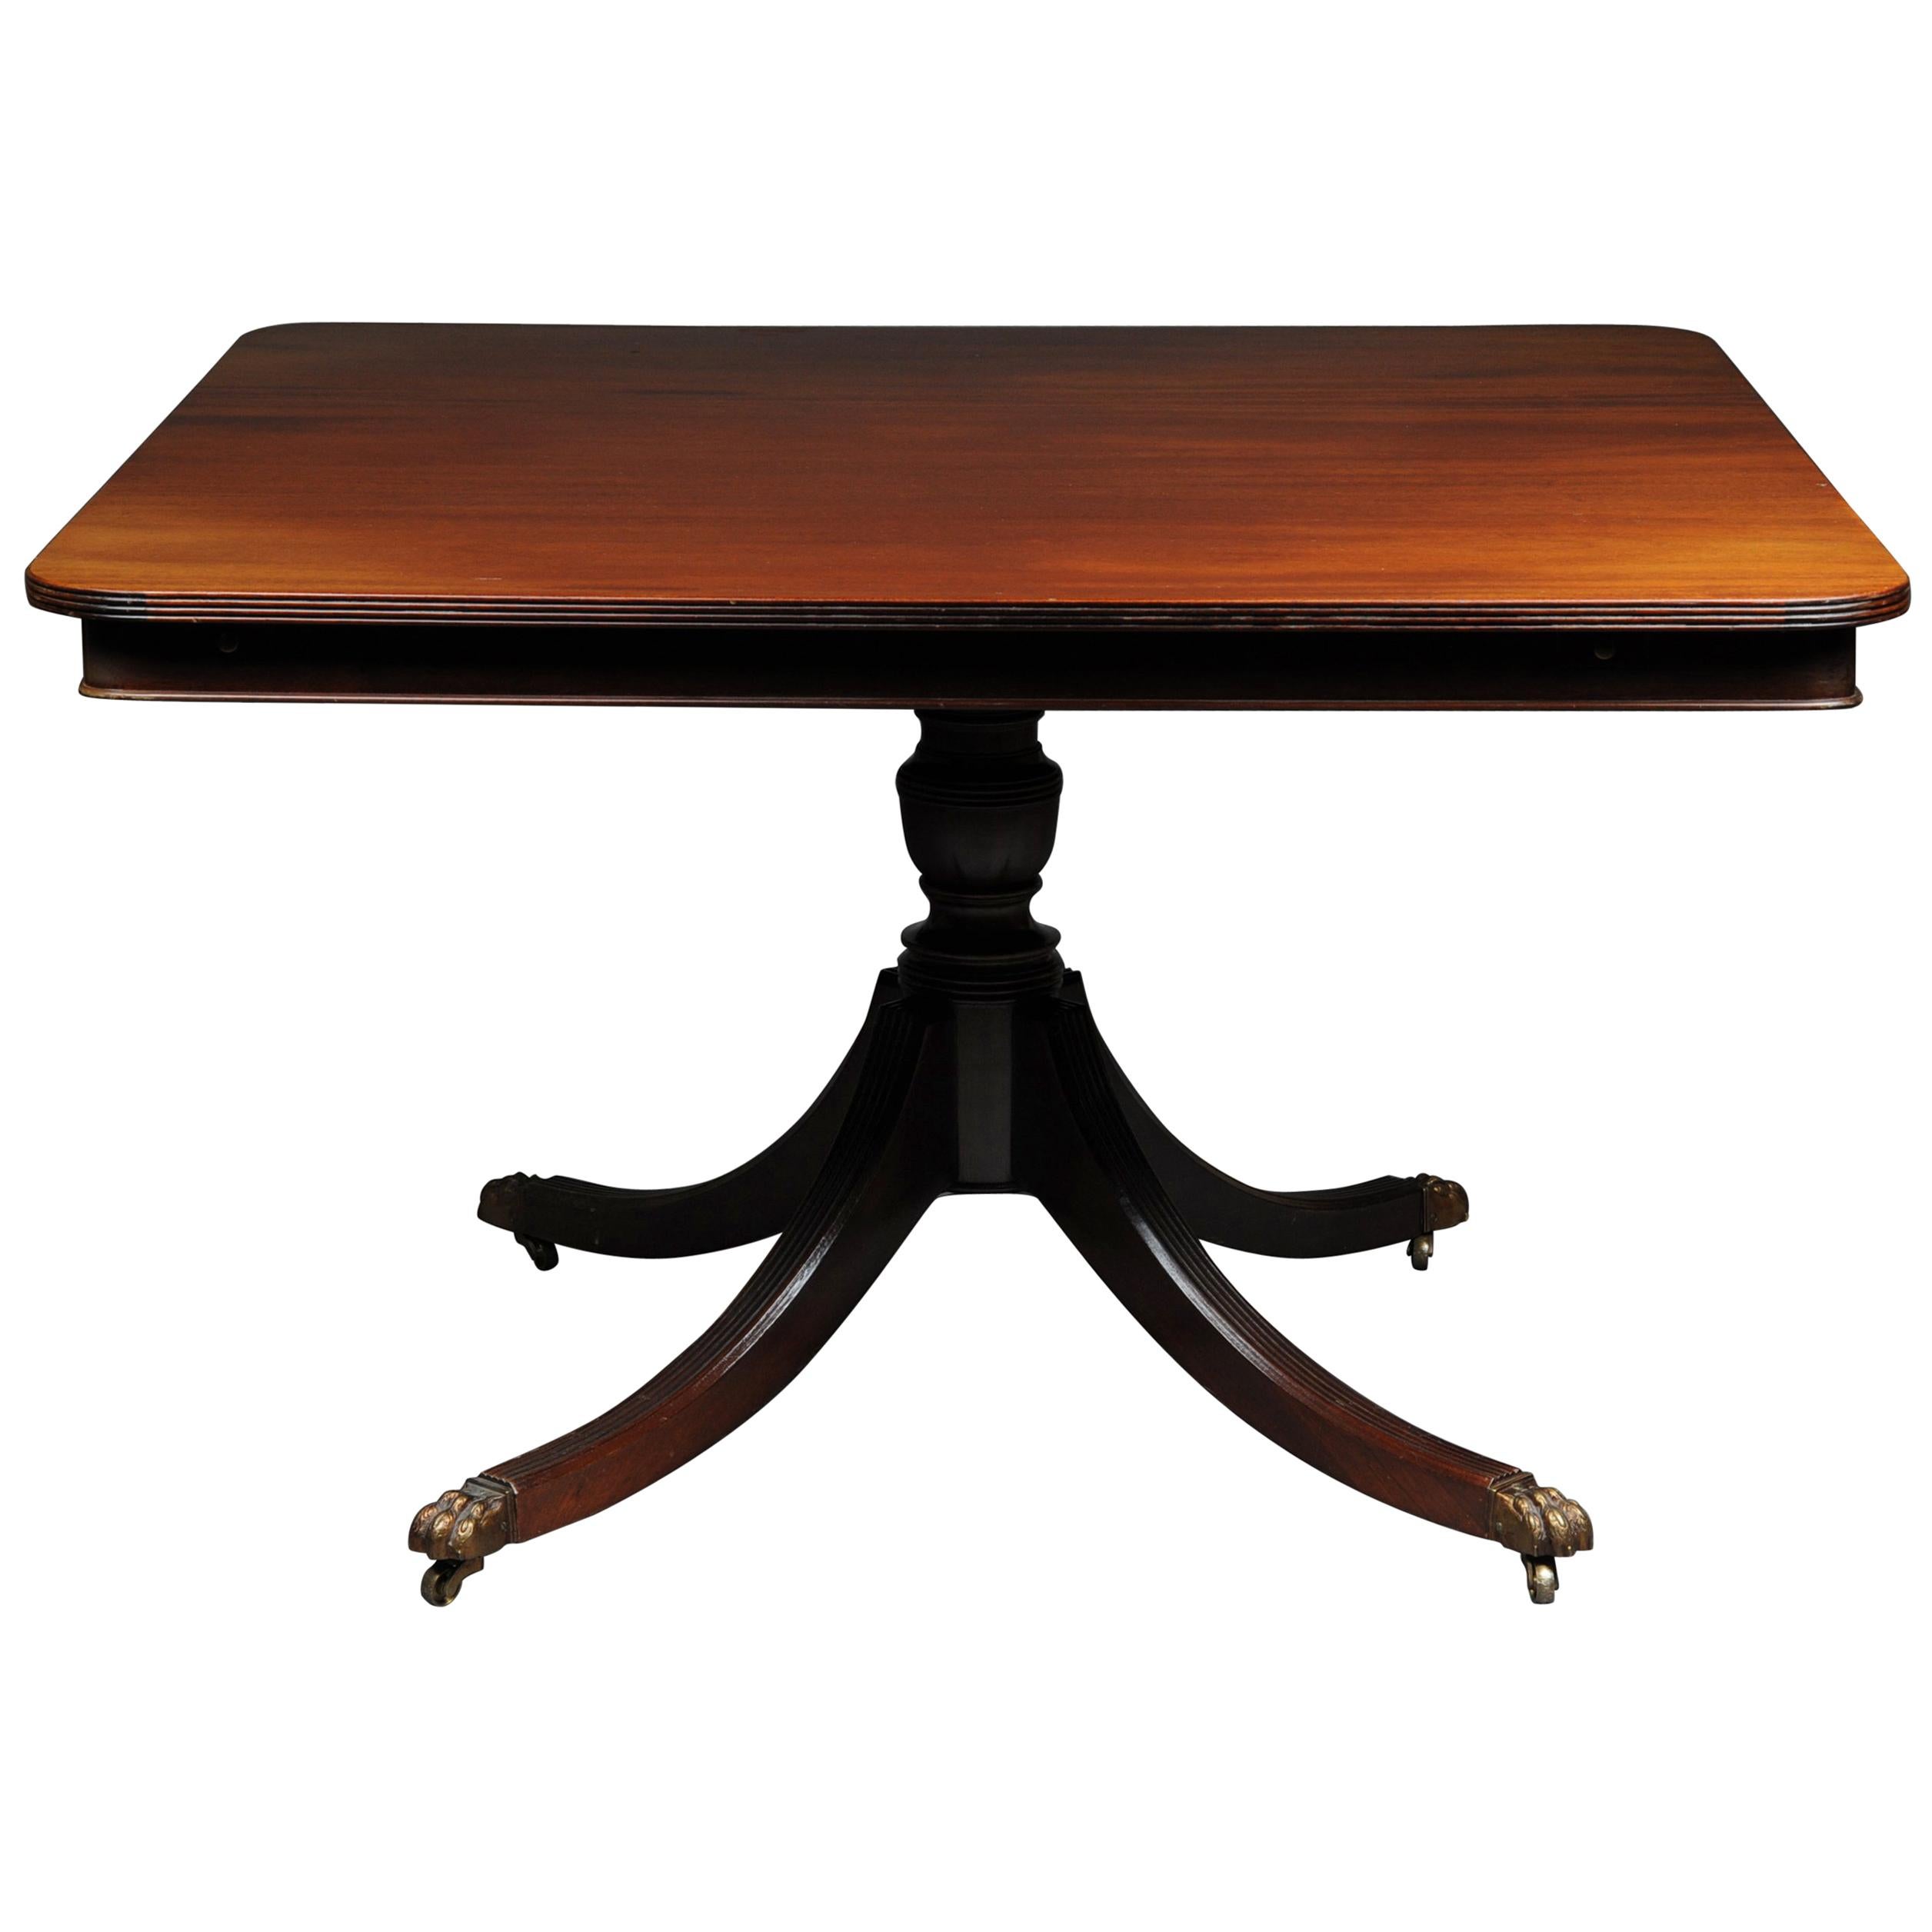 English Dining Table / Table, Mahogany, Victorian, Extendible